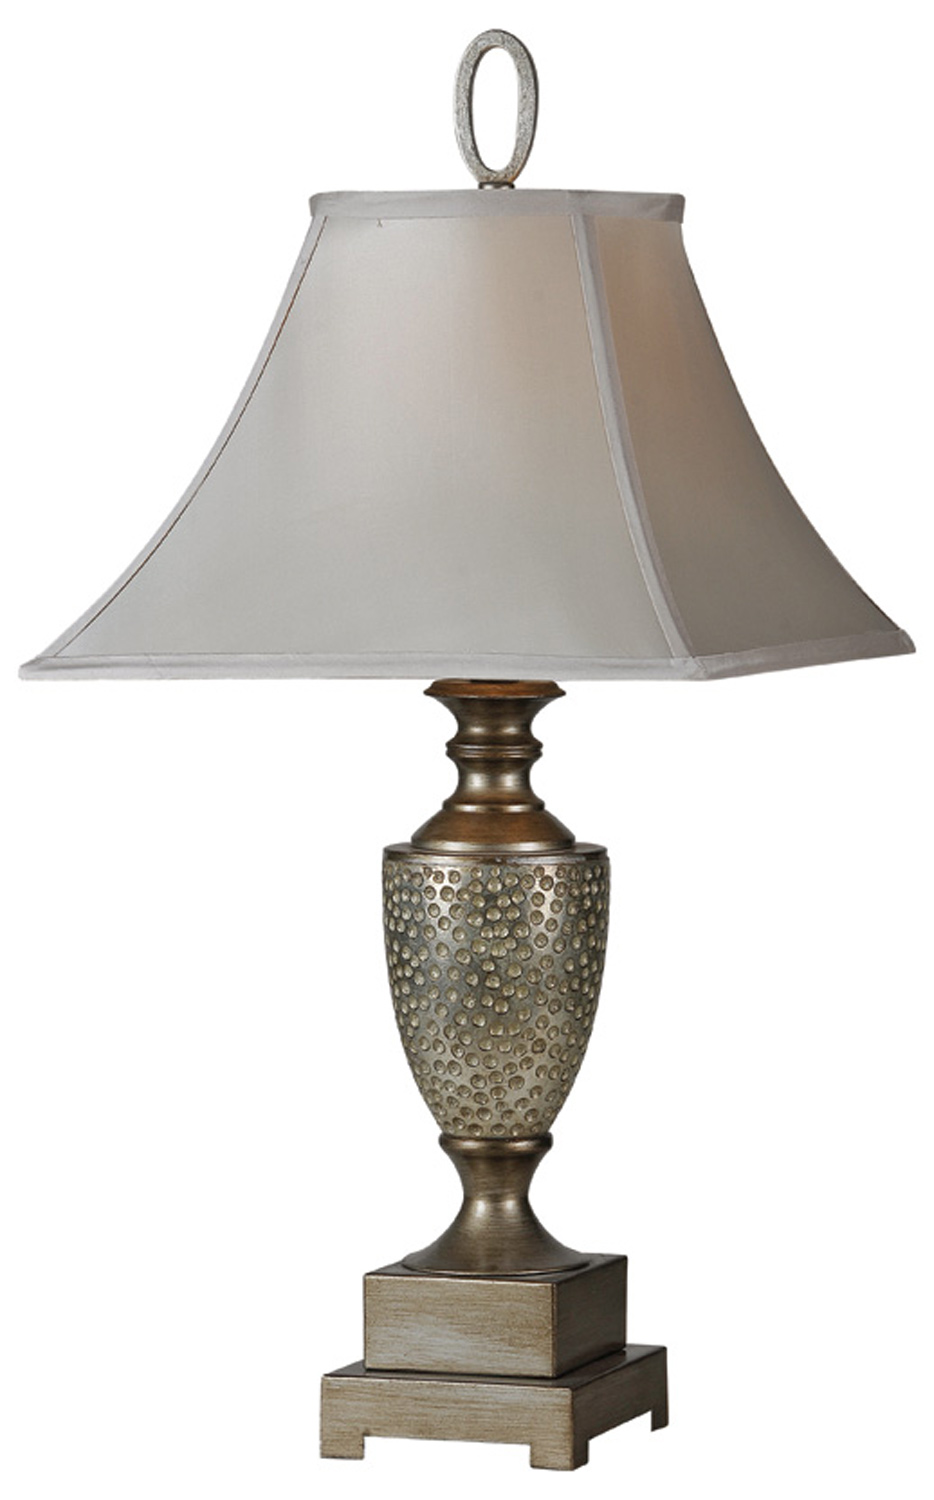 Ren-Wil Dallas Table Lamp